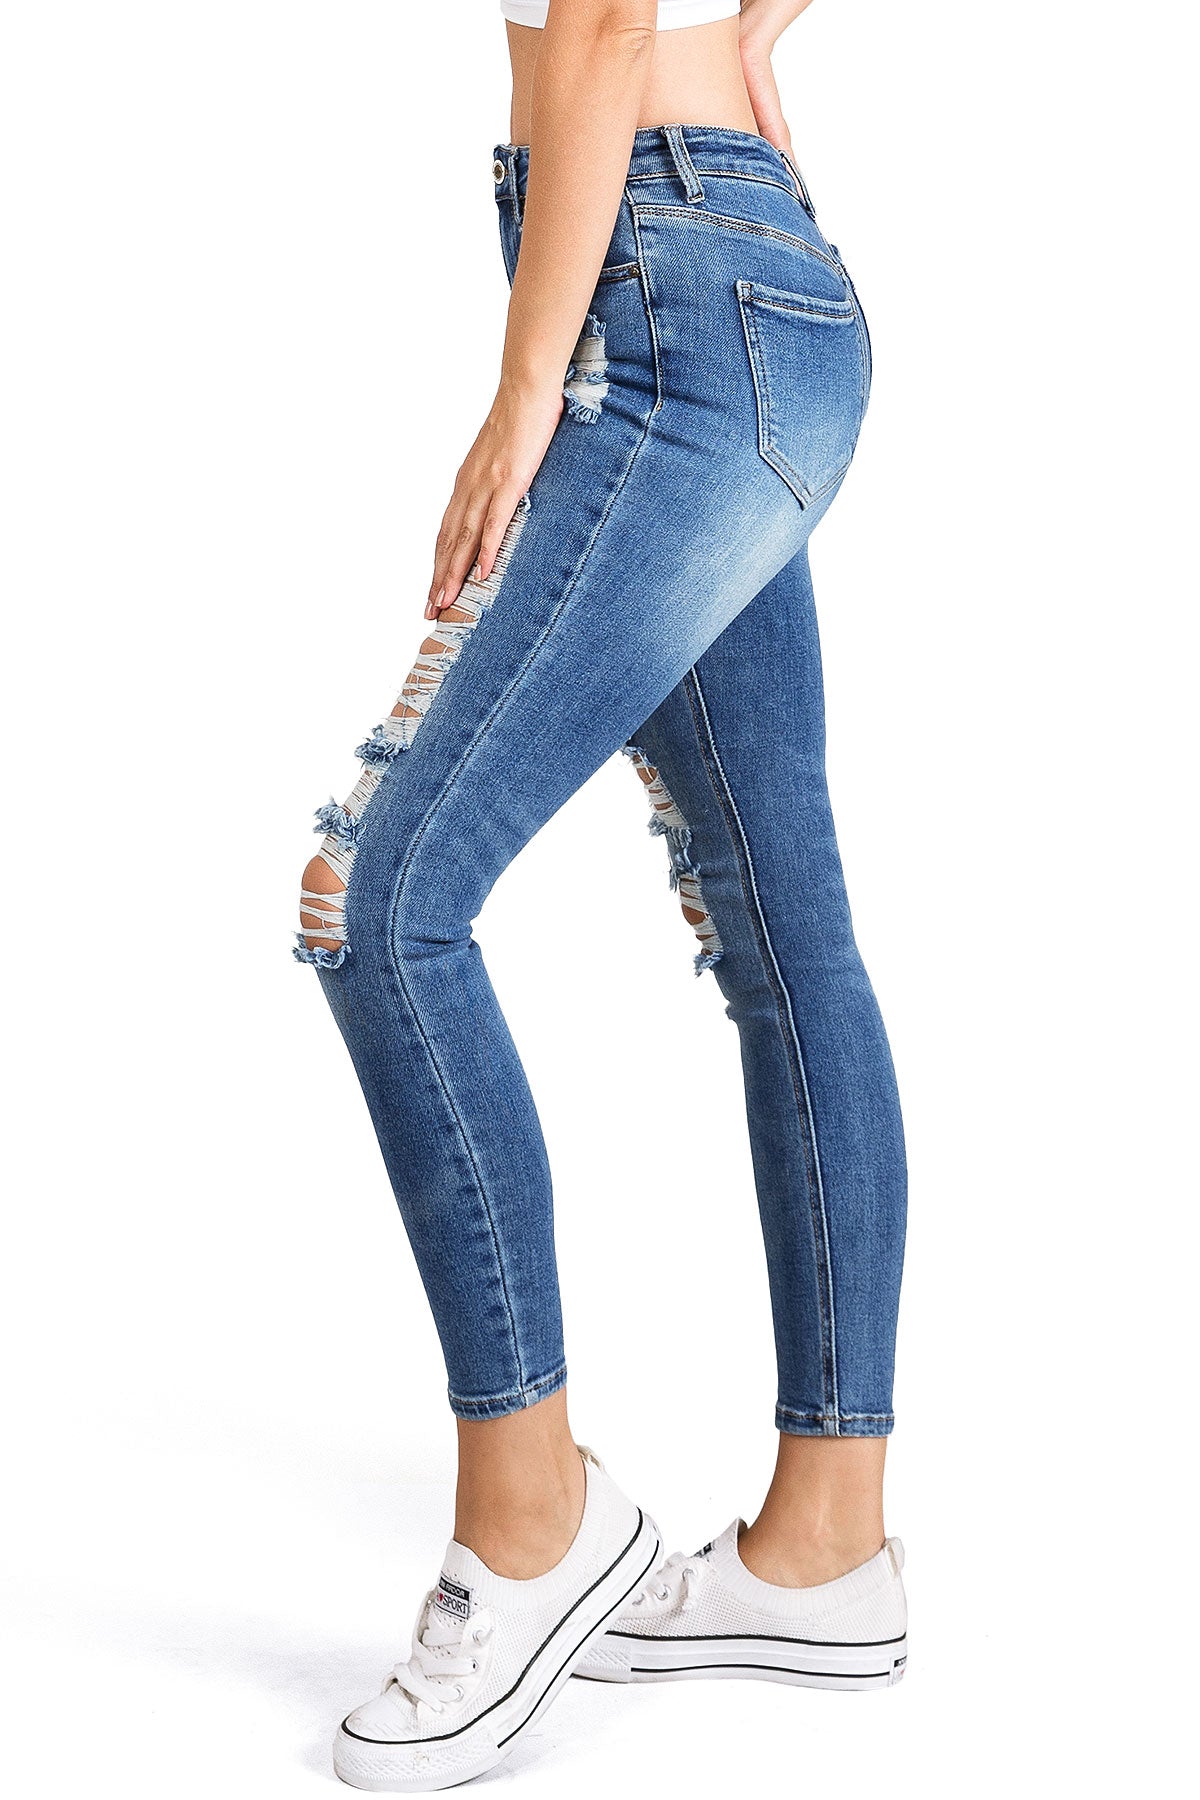 Wax Jean Women's Juniors Distressed High Rise Ankle Skinny Jeans (0, Medium Denim) - image 2 of 5